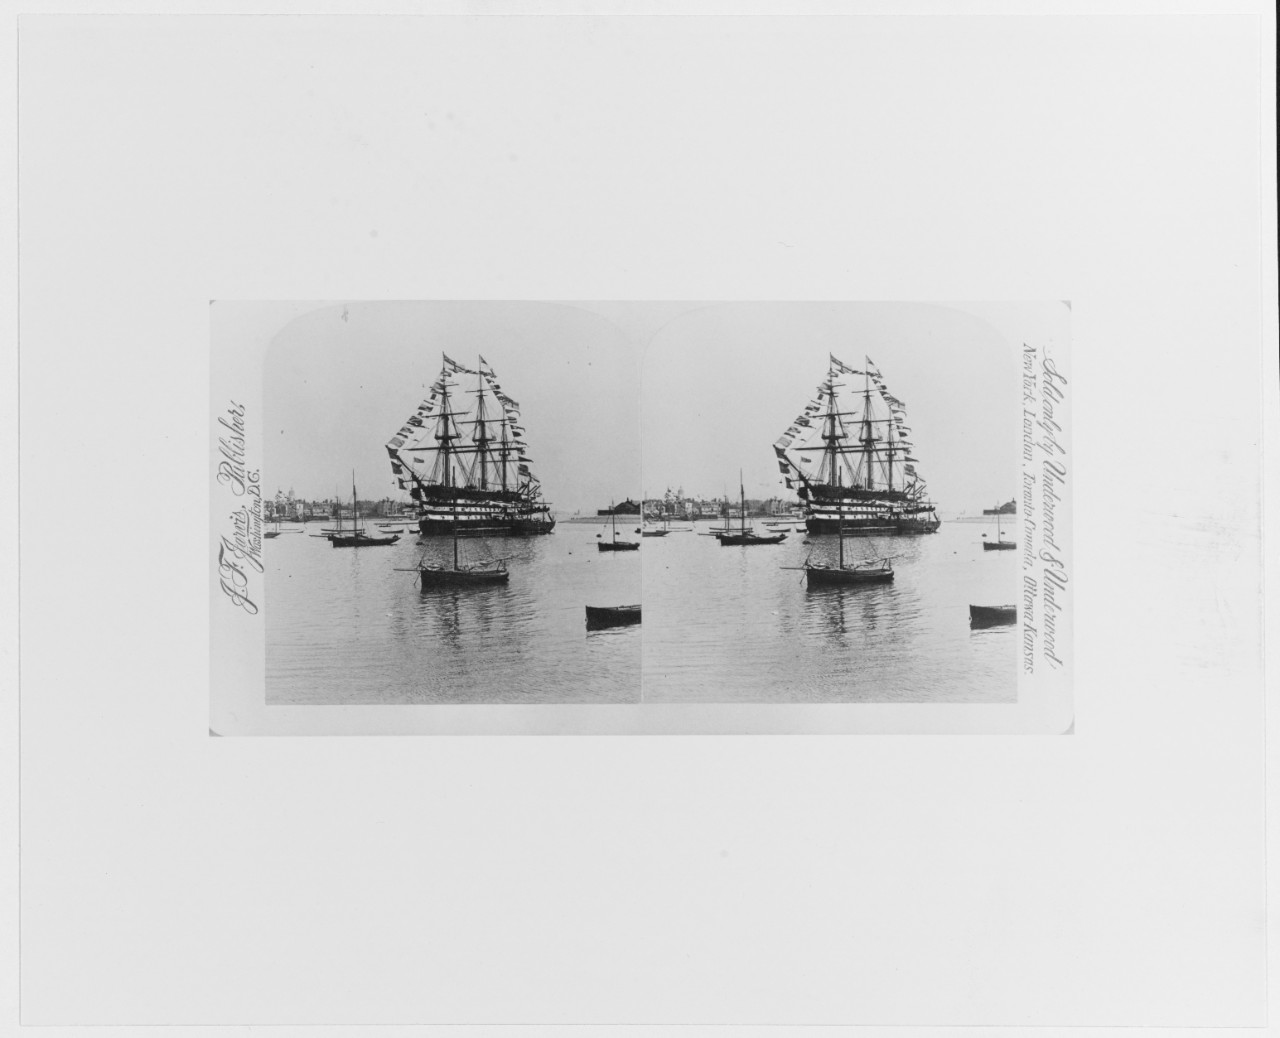 British three-deck ship-of-the-line, stereo photo